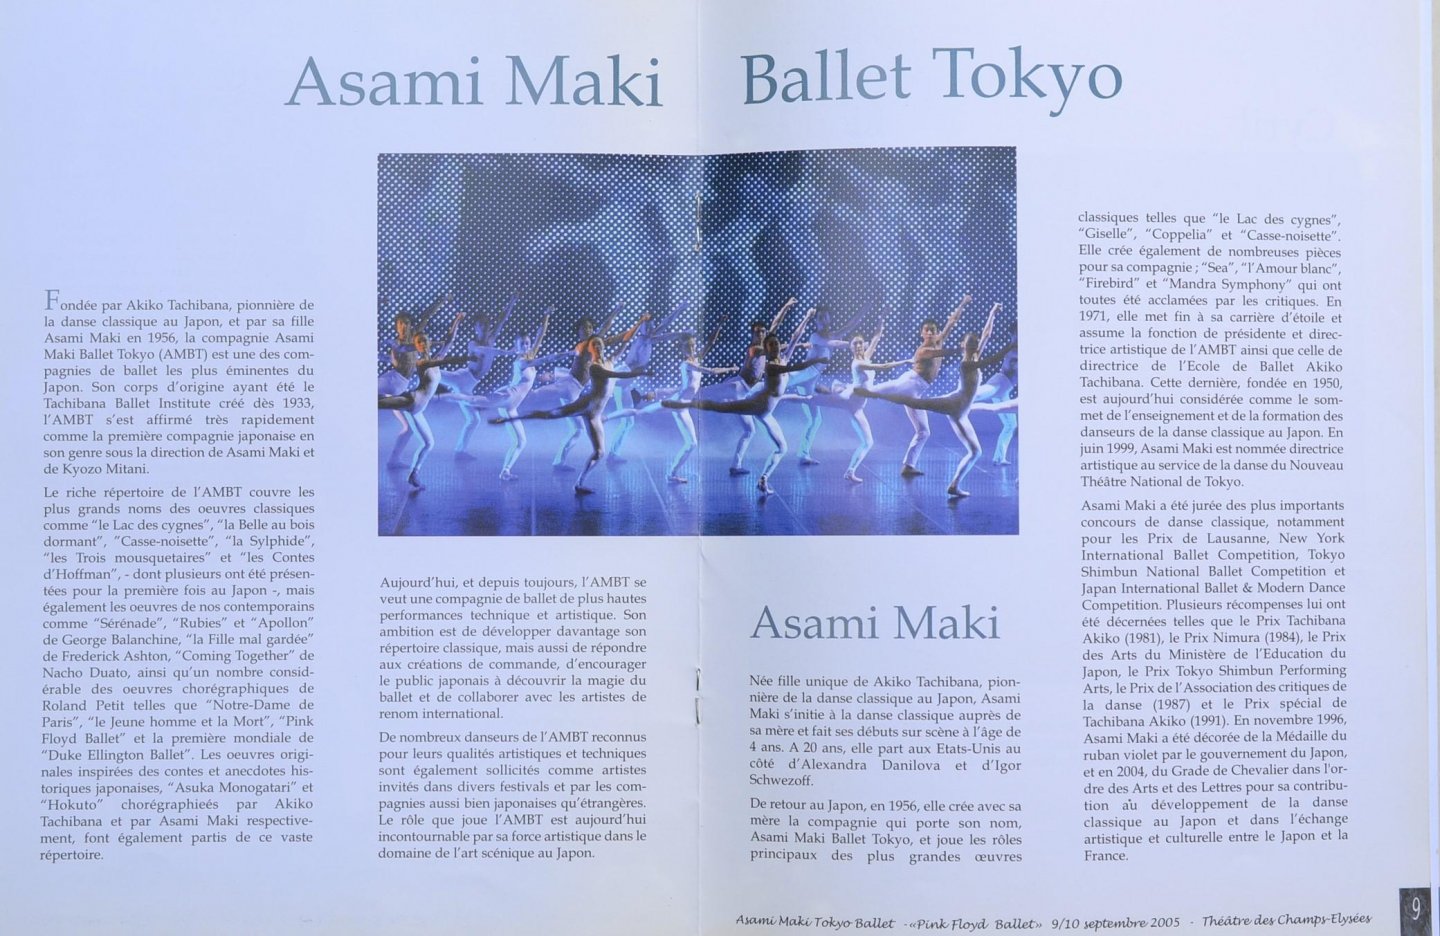 Petit, Roland - Pink Floyd Ballet - ballet de Roland Petit - Asami Maki Ballet Tokyo